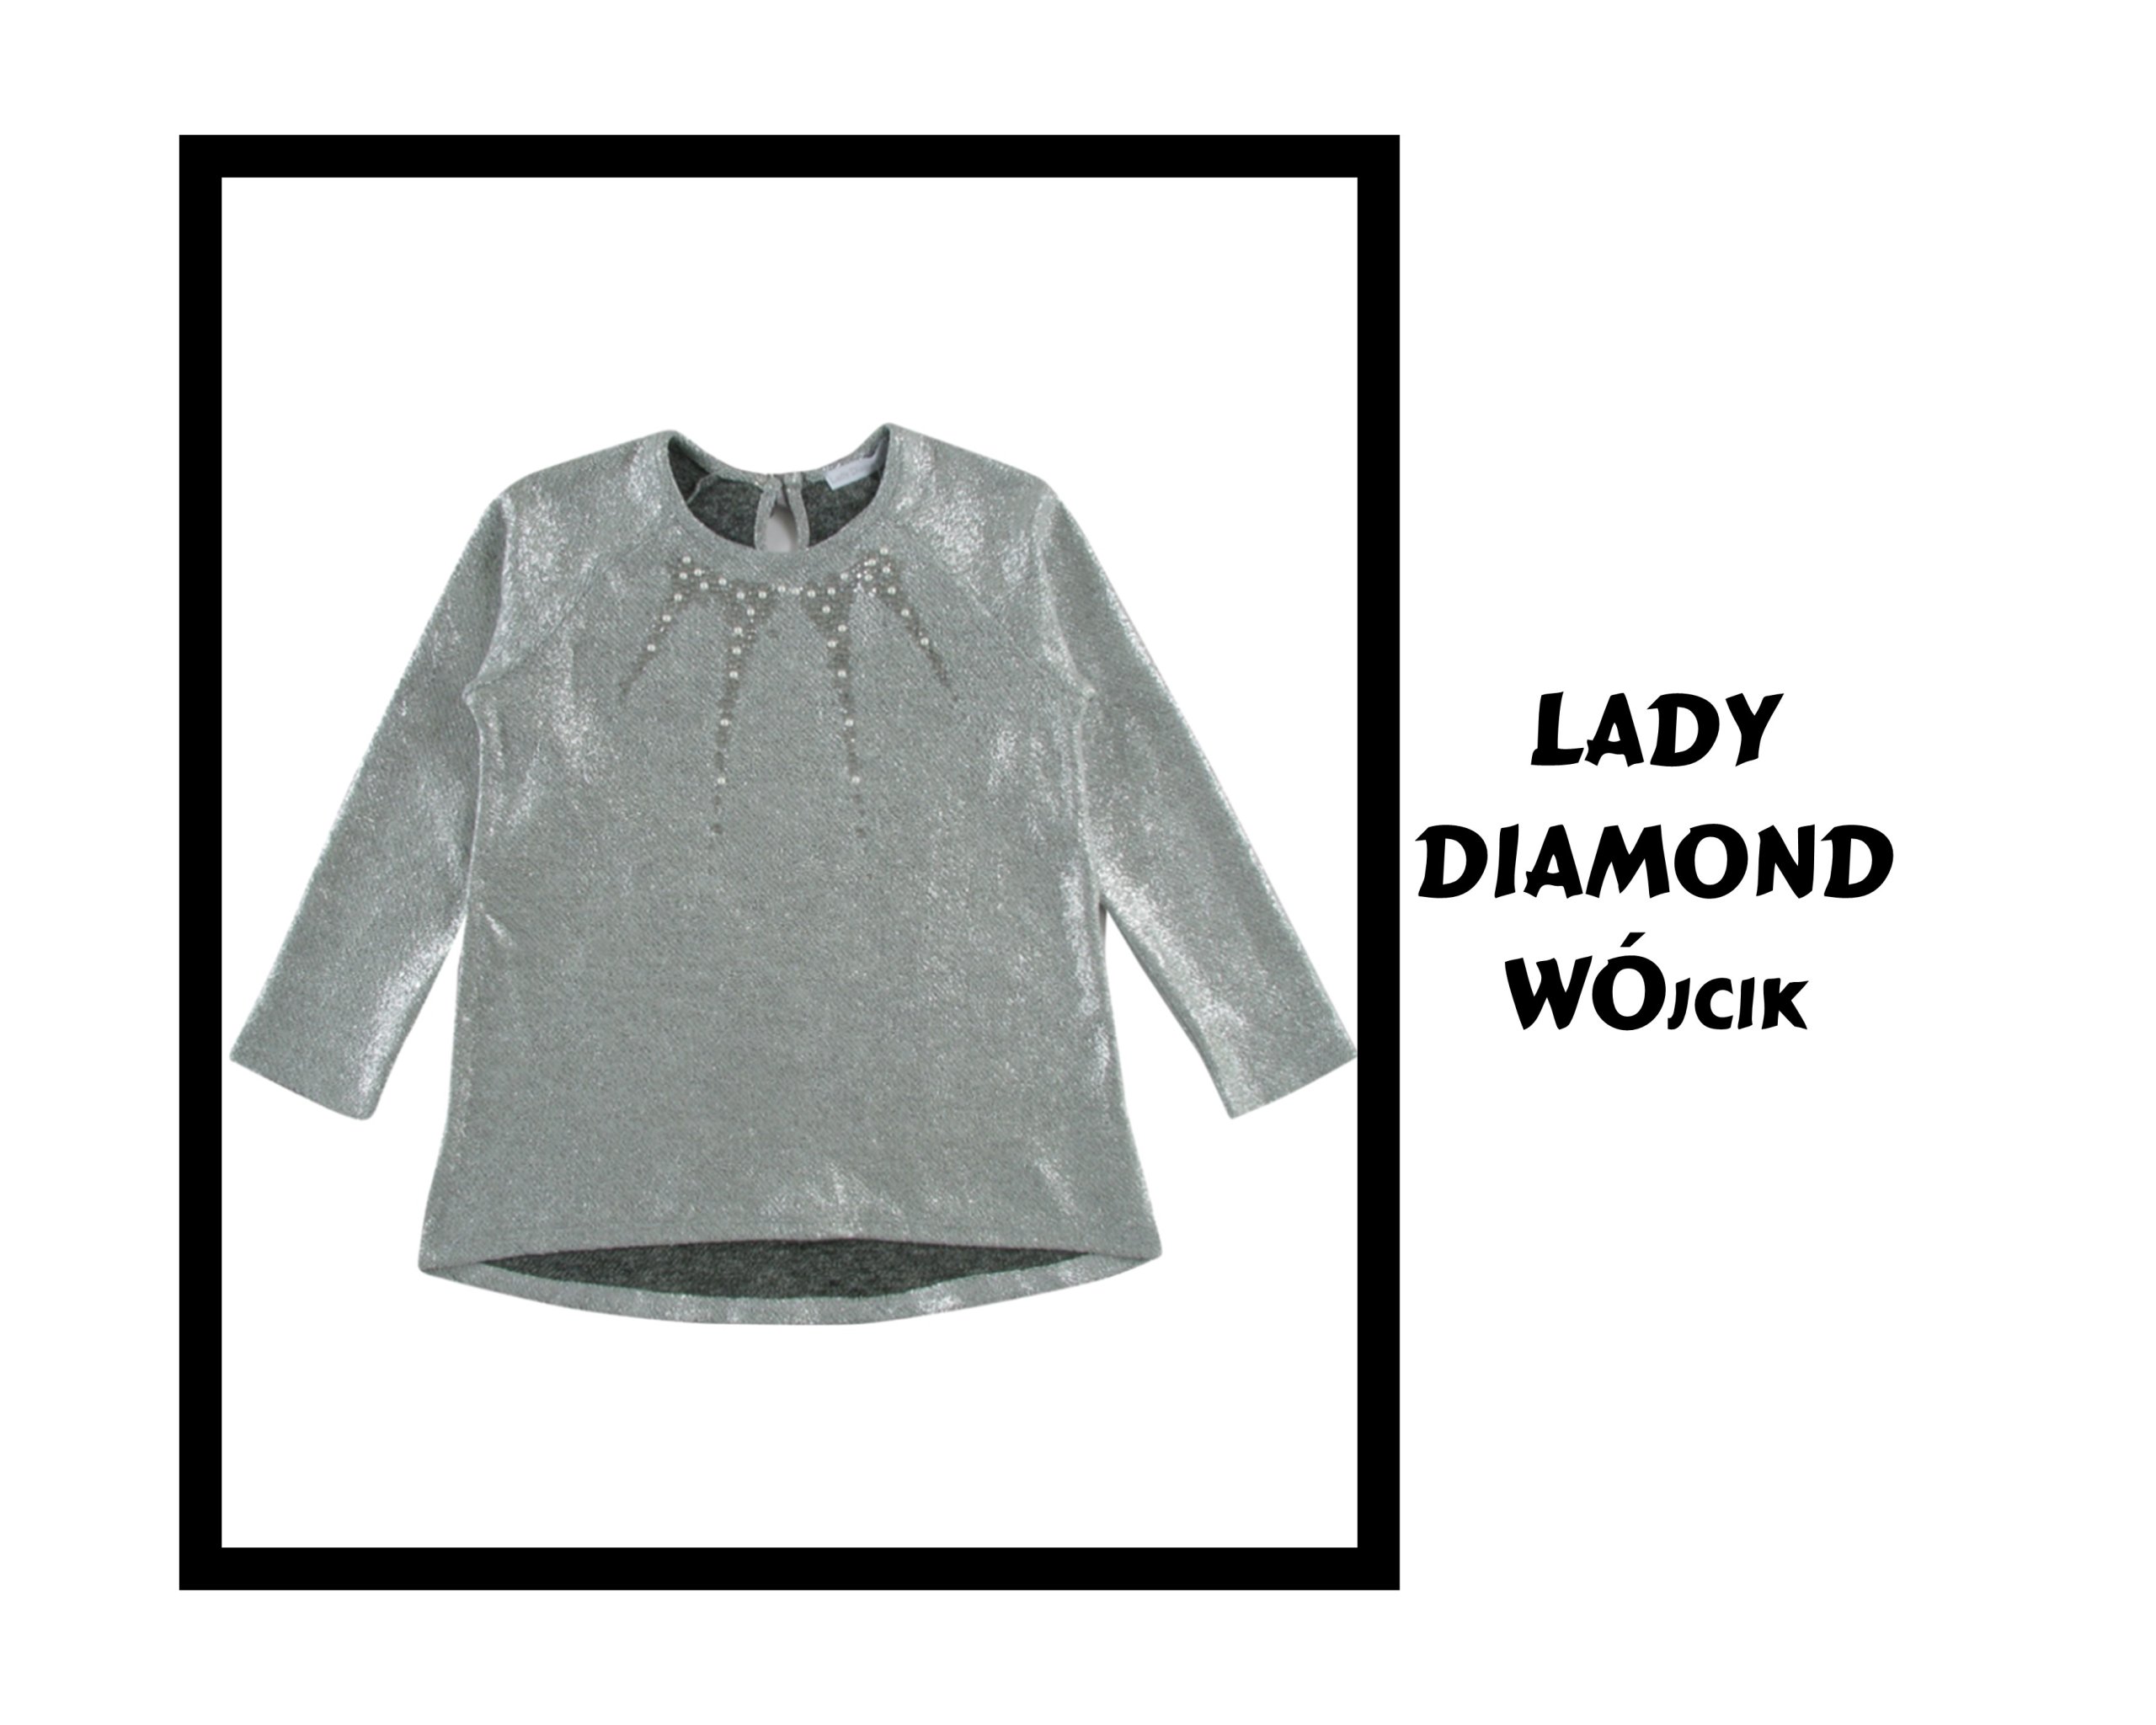 Wójcik-Lady Diamond-Muza tunika bluzka święta